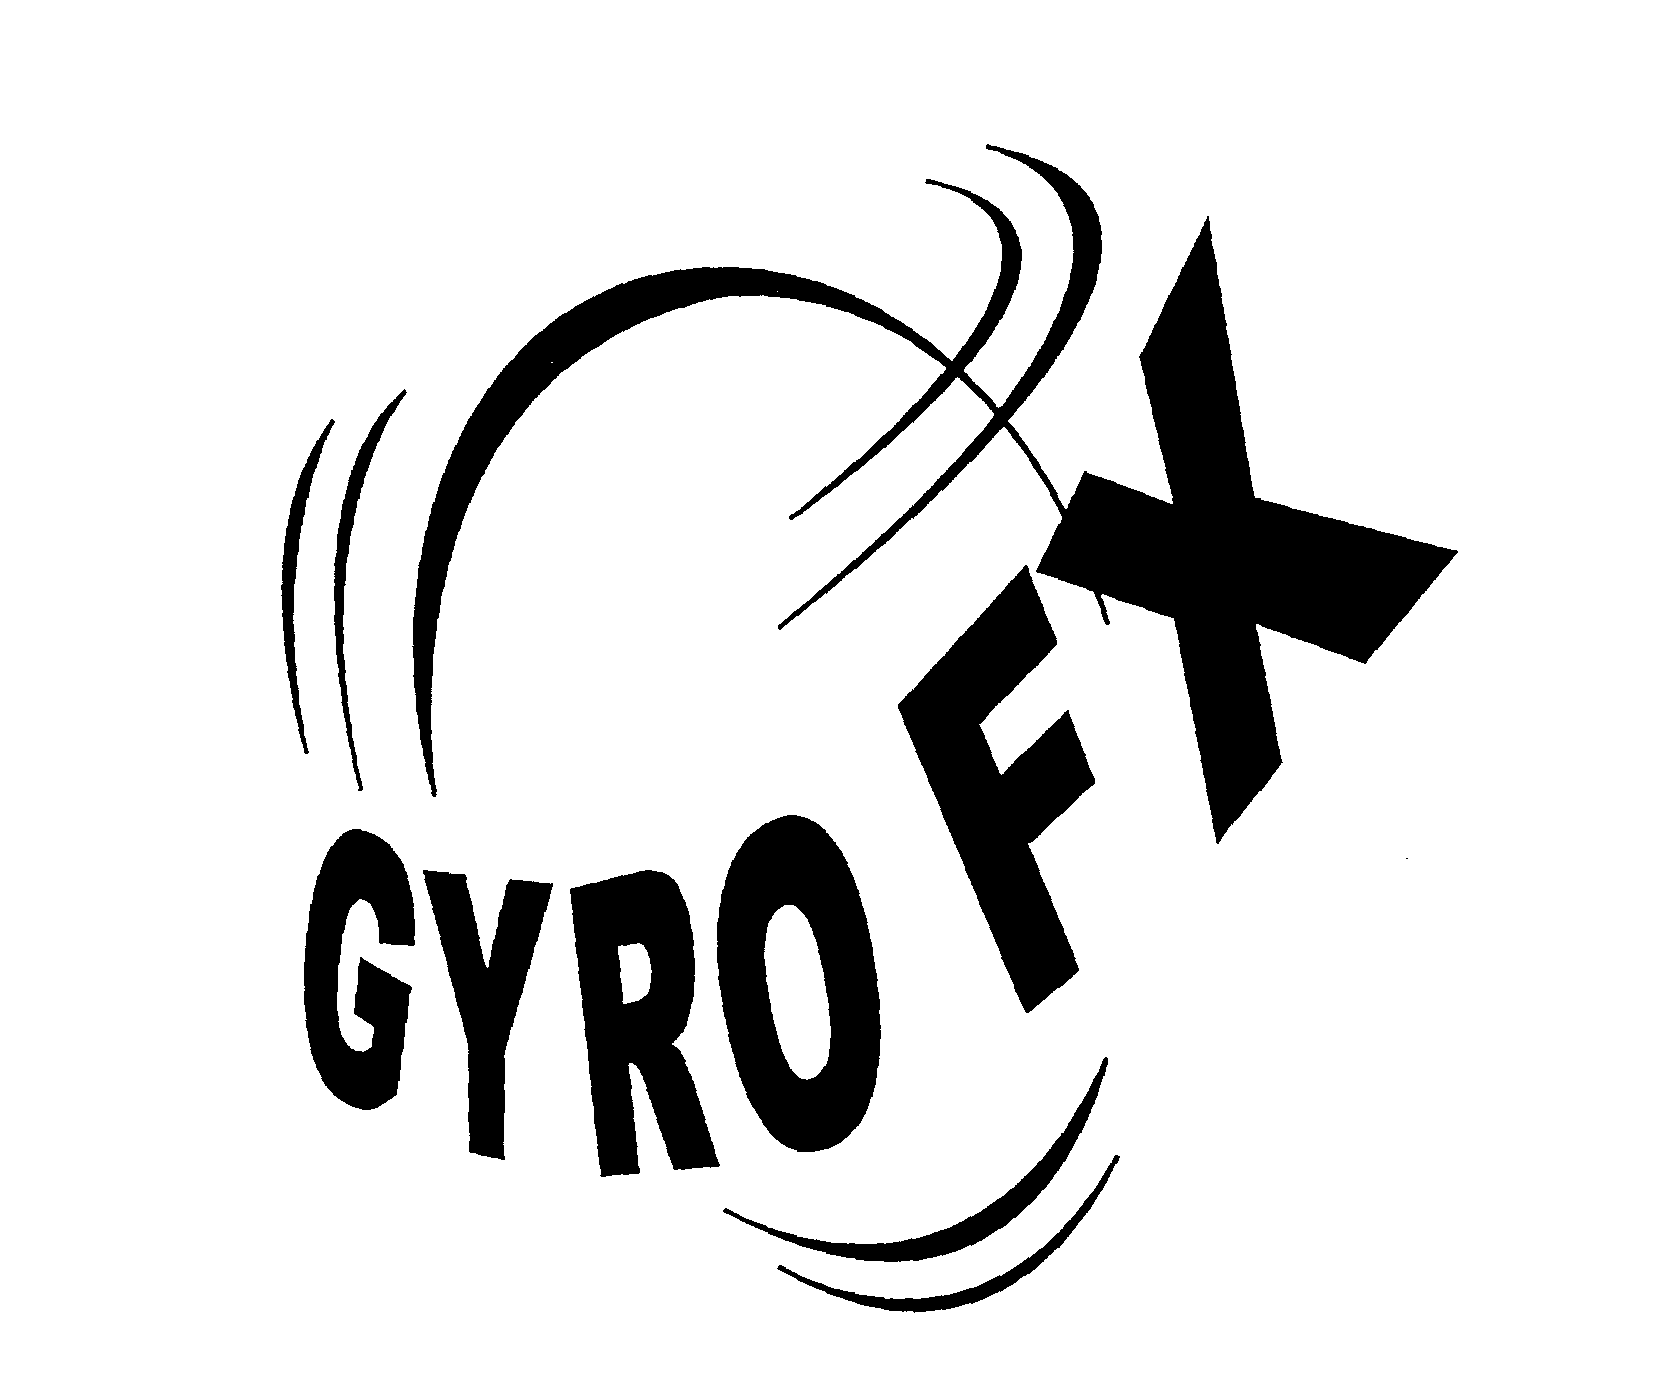 GYRO FX